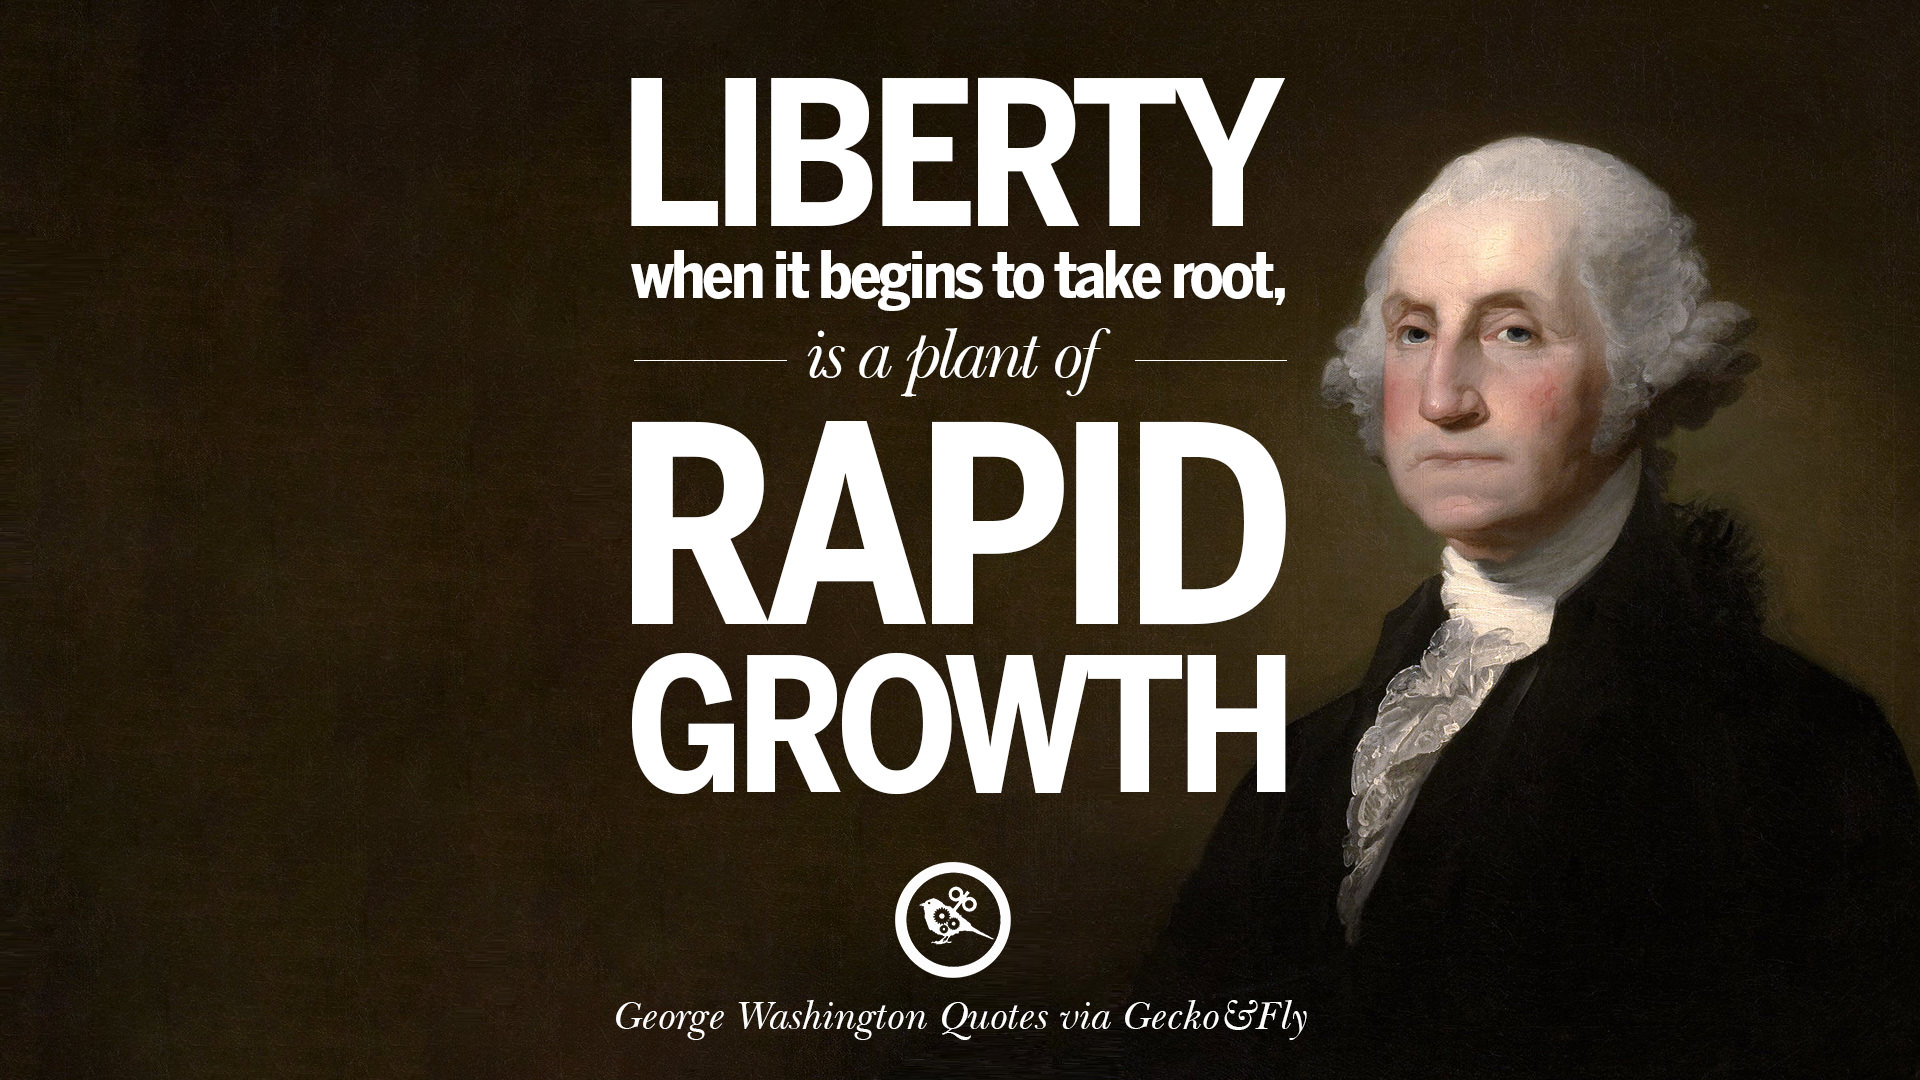 20 Famous Washington Quotes on Freedom, Faith